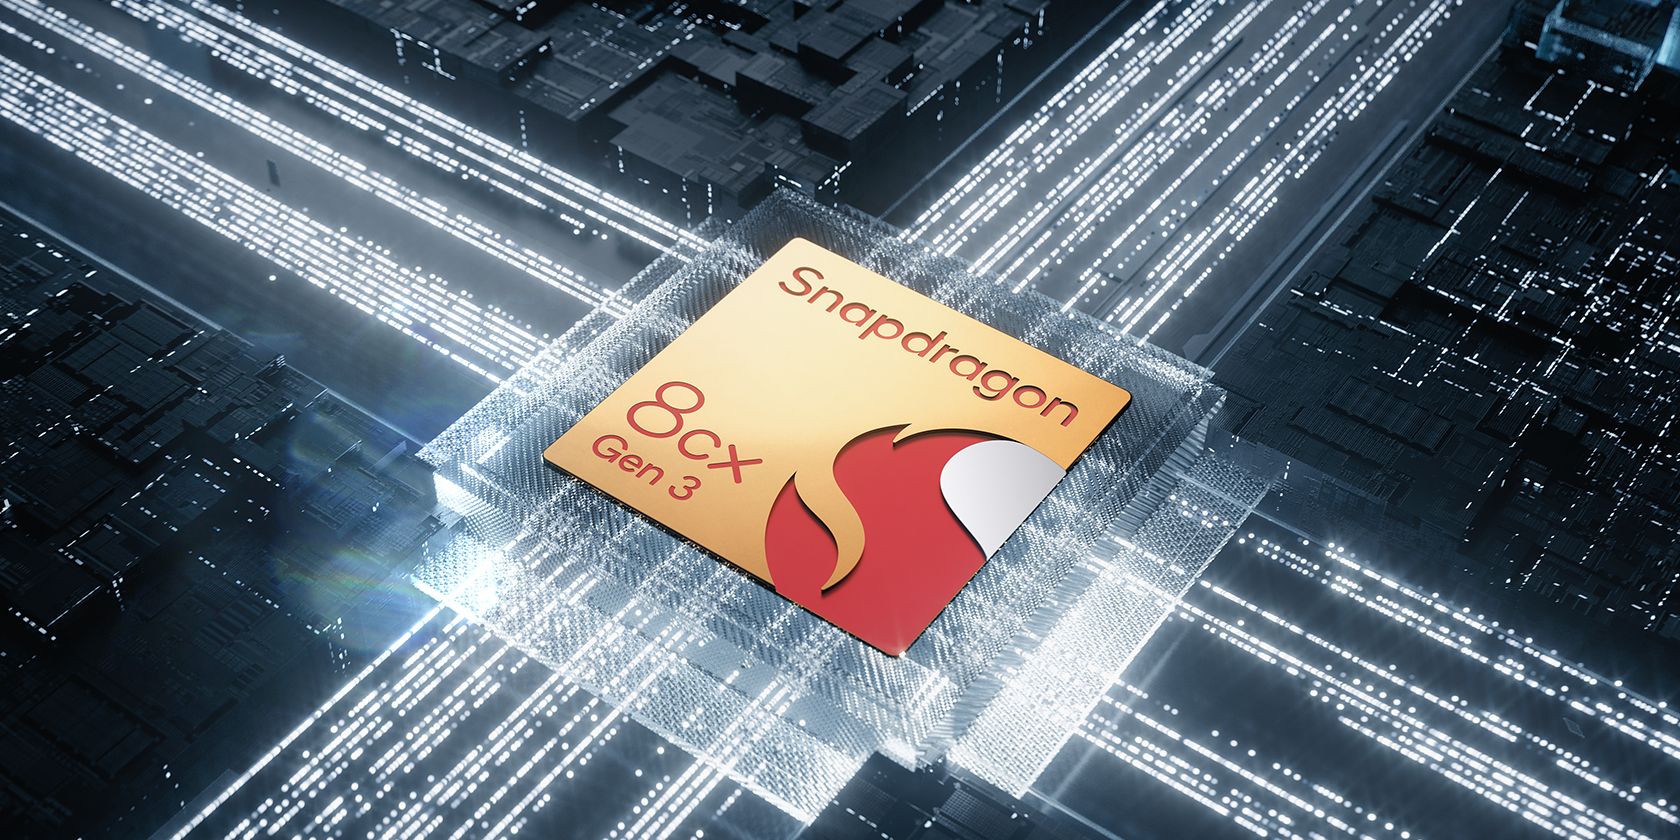 Snapdragon 8cx Gen 3 SoC